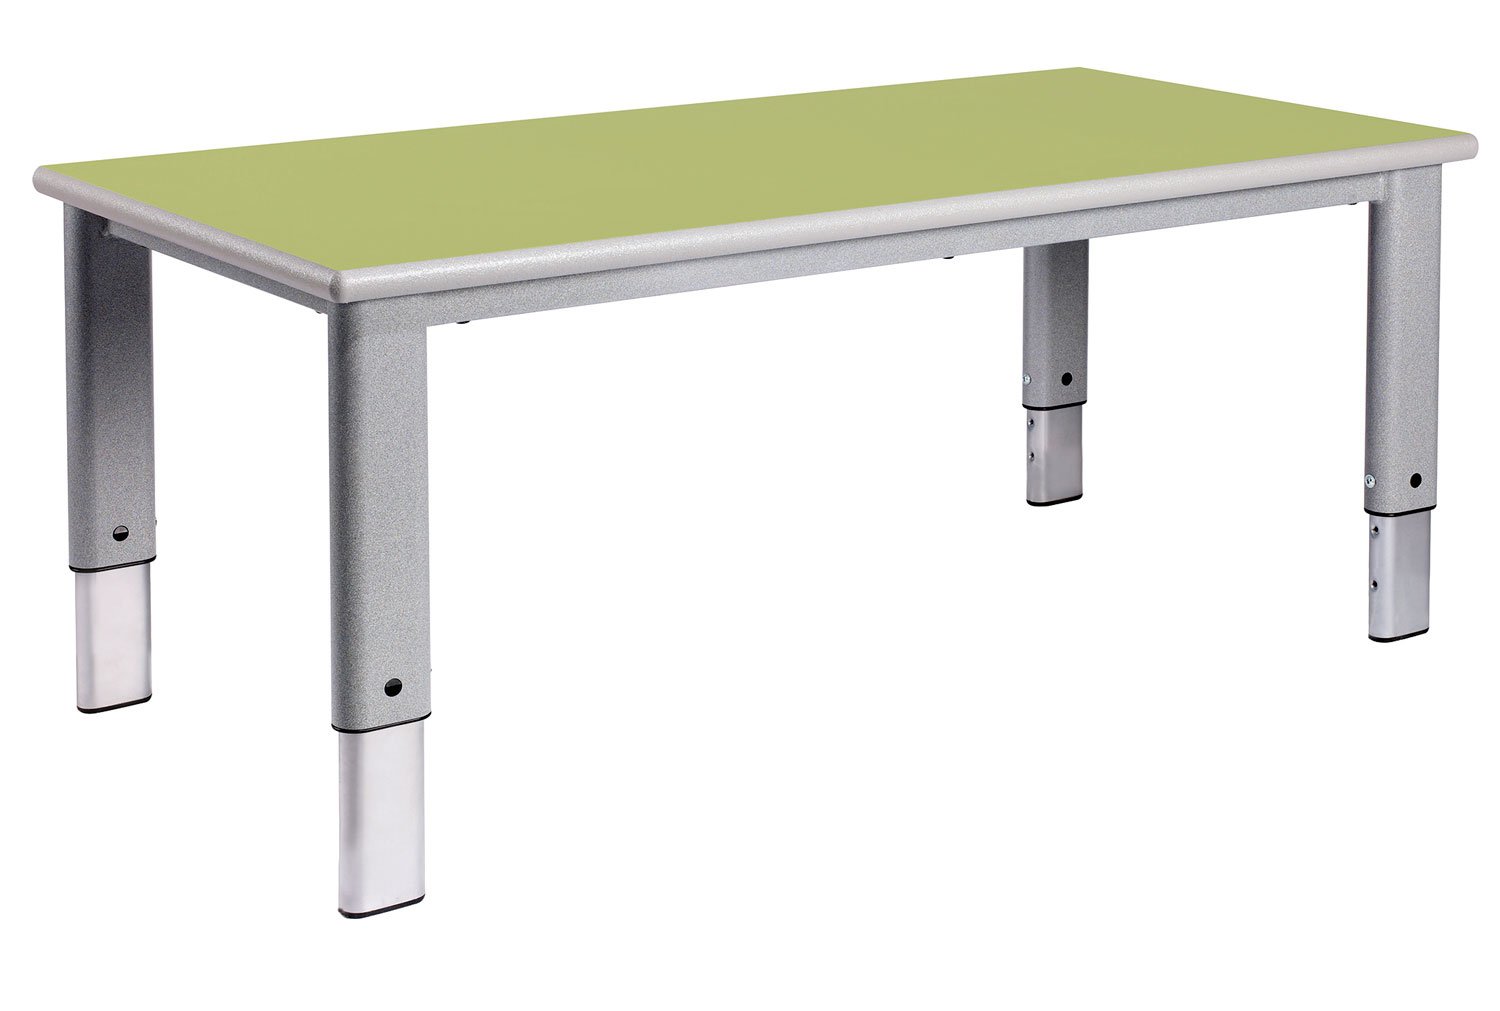 Qty 4 - Elite Height Adjustable Rectangular Classroom Table, Black Frame, Purple Top, PU Grey Edge